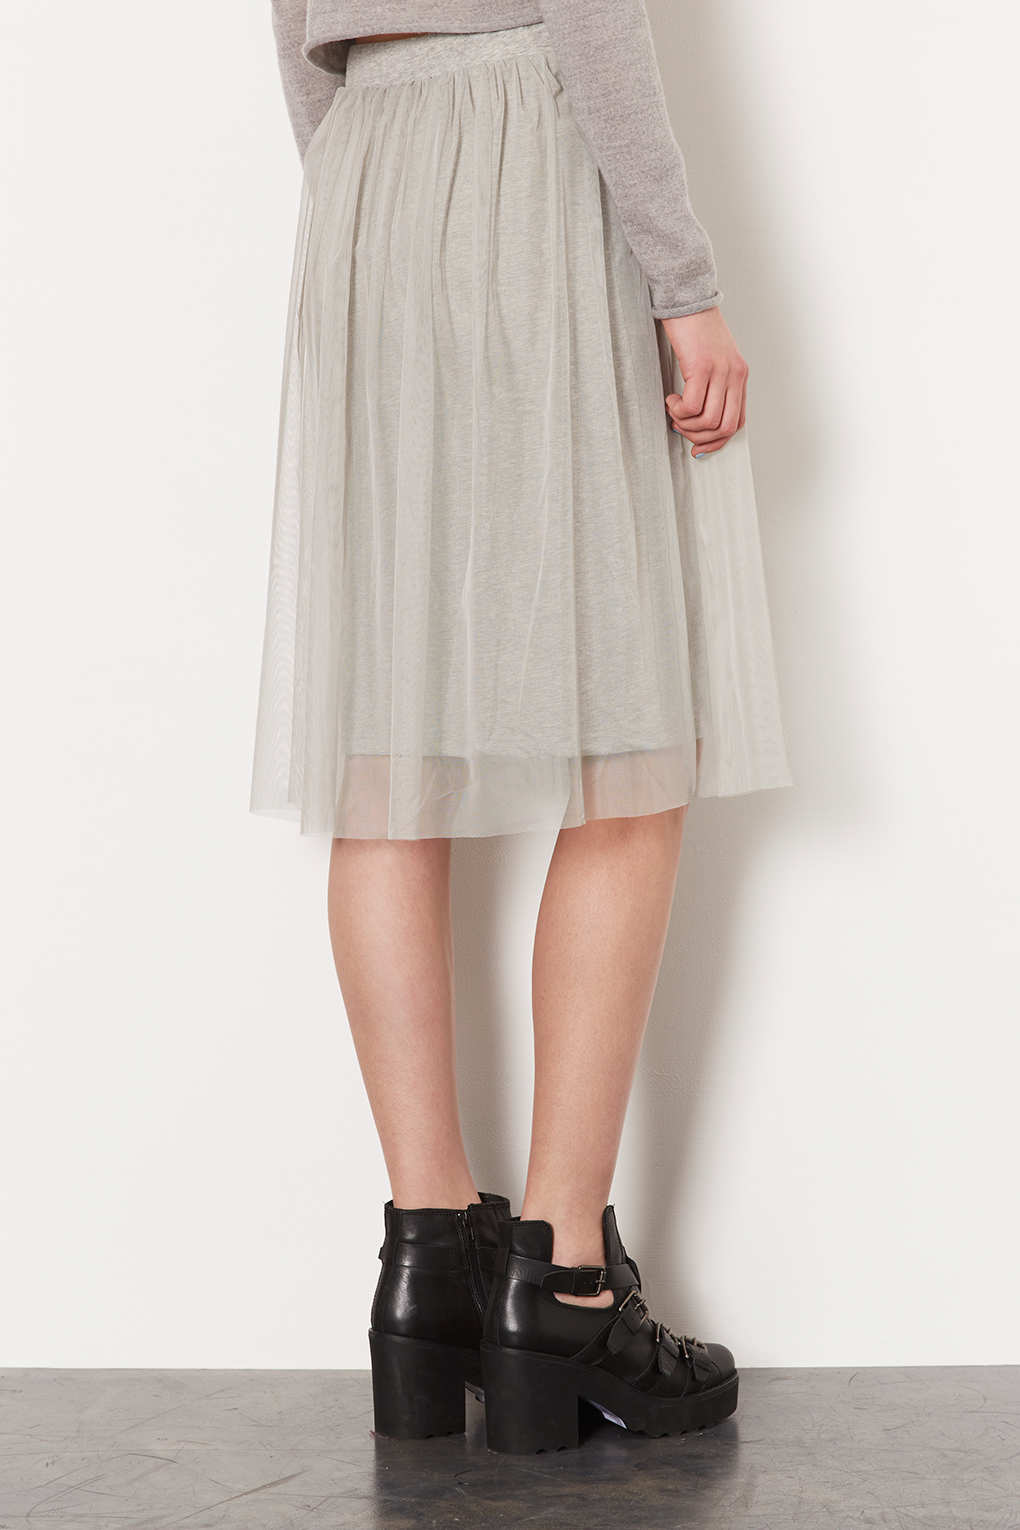 Lyst Topshop Grey Midi Tulle Skirt In Gray 1110